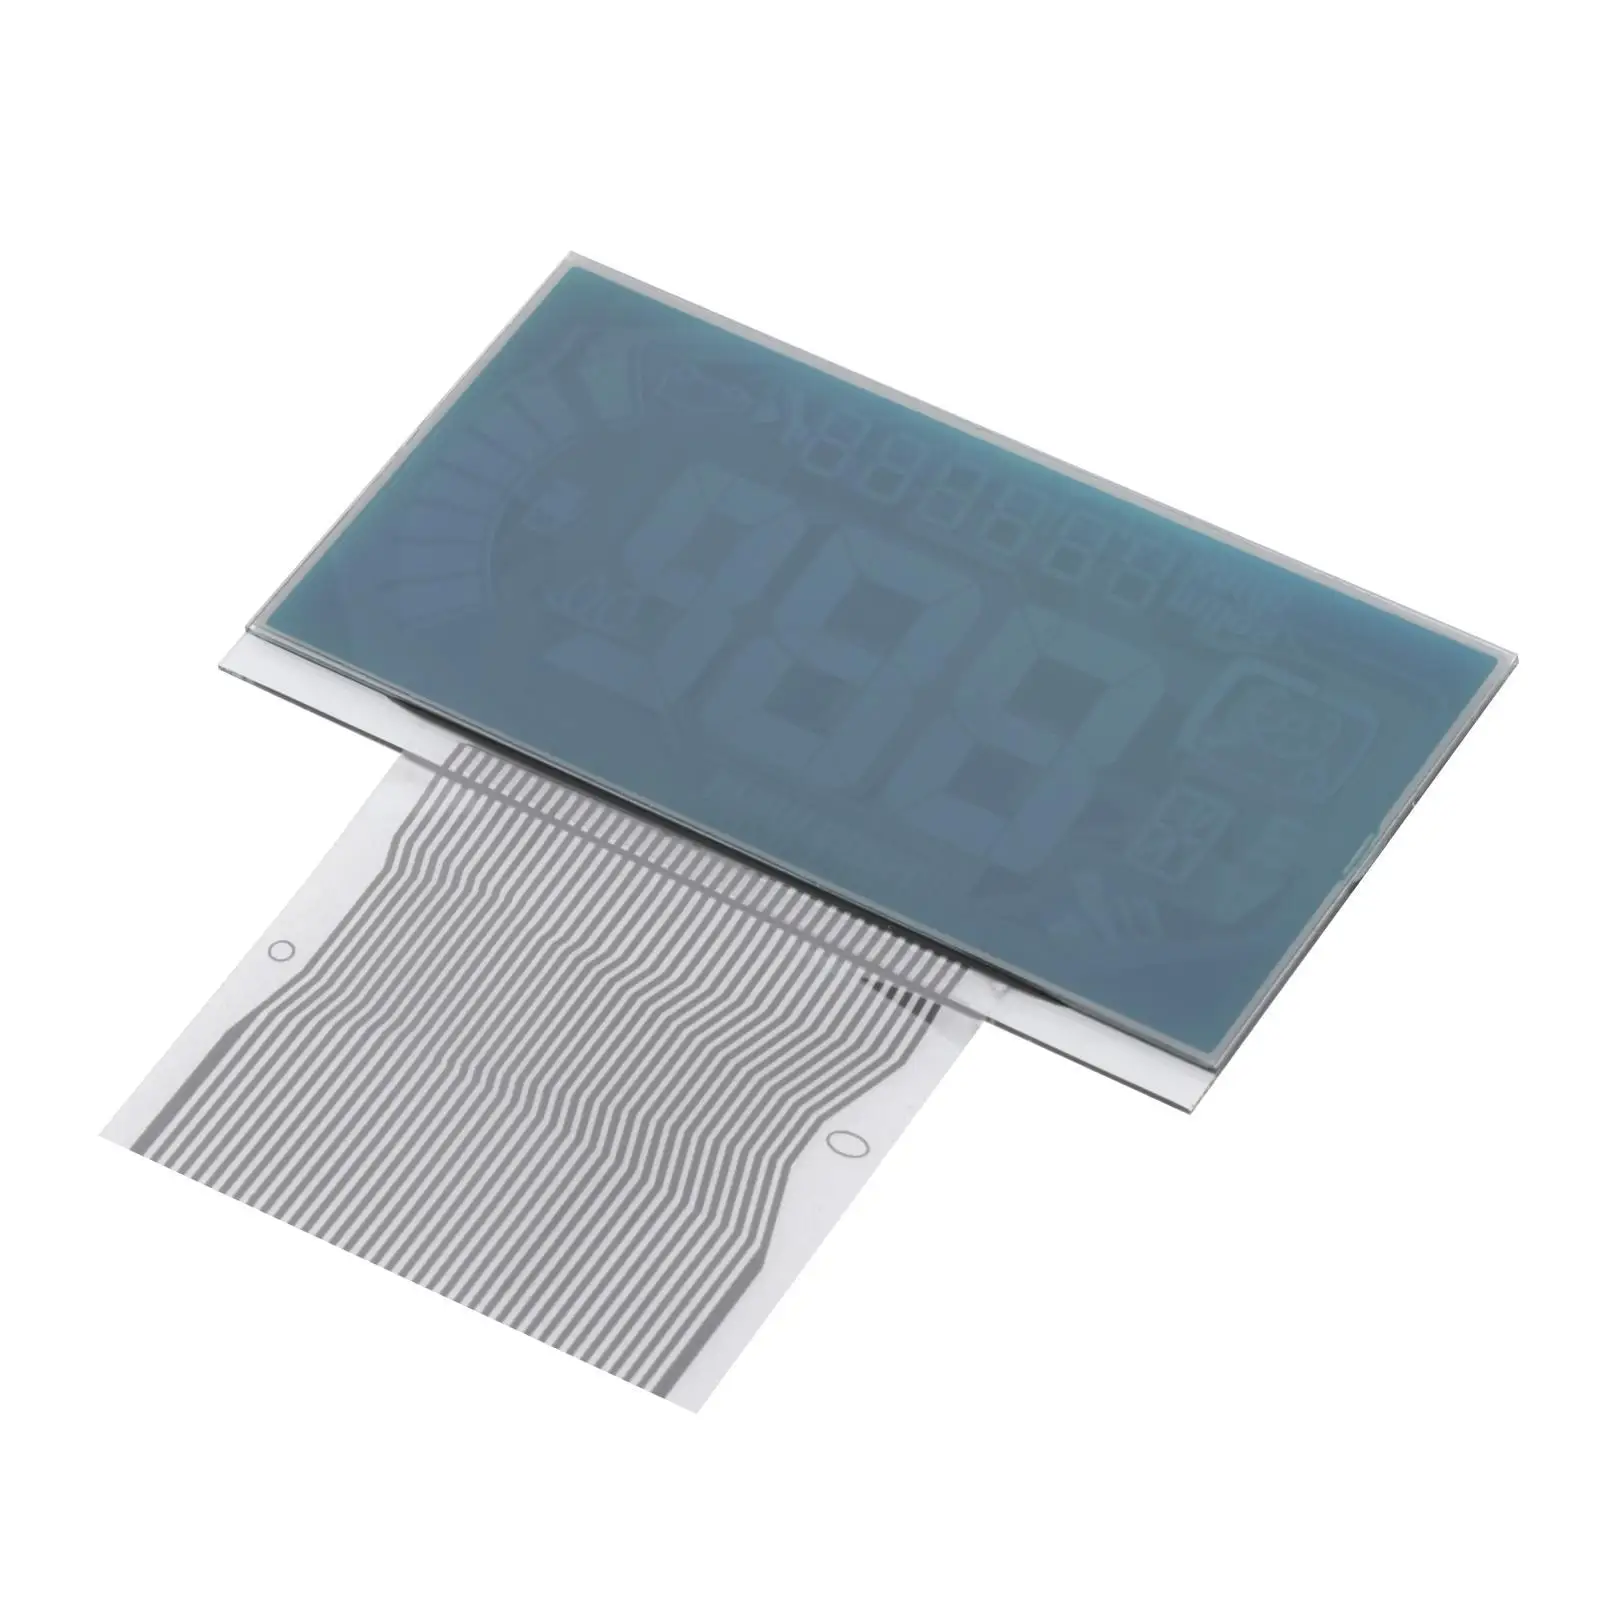 LCD Gague Display Speedometer Instrument for Twingo II 2 MK2 Combi Durable Professional Premium High Performance